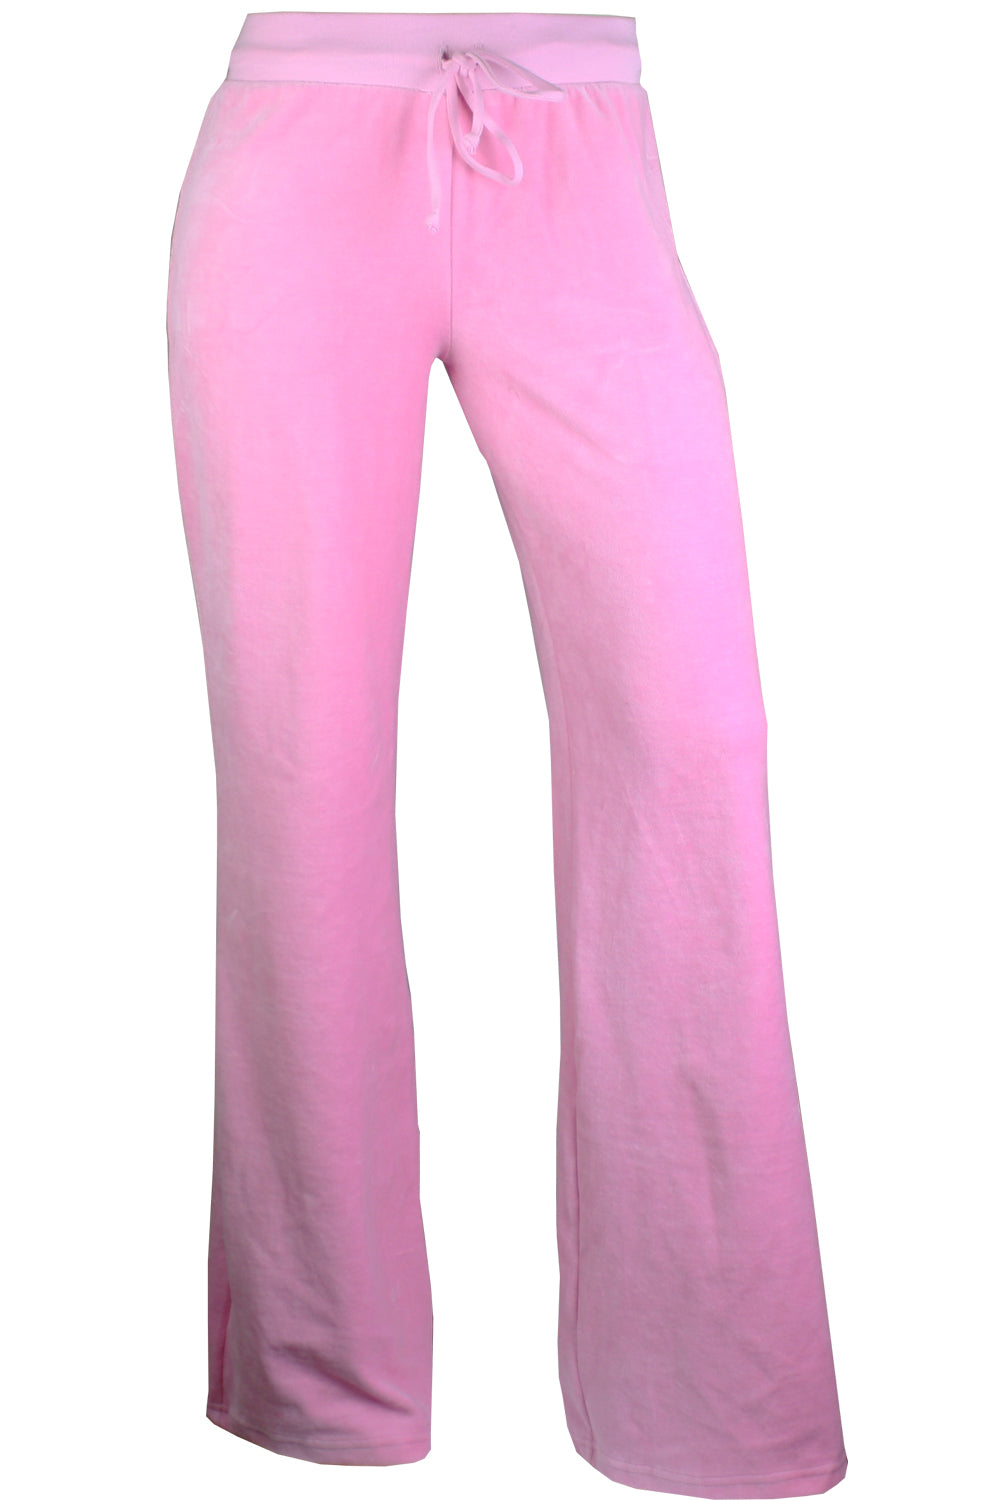 Tootsie Roll, Intimates & Sleepwear, Tootsie Roll Womens Xl Pink Fleece  Pajama Lounge Sleep Pants